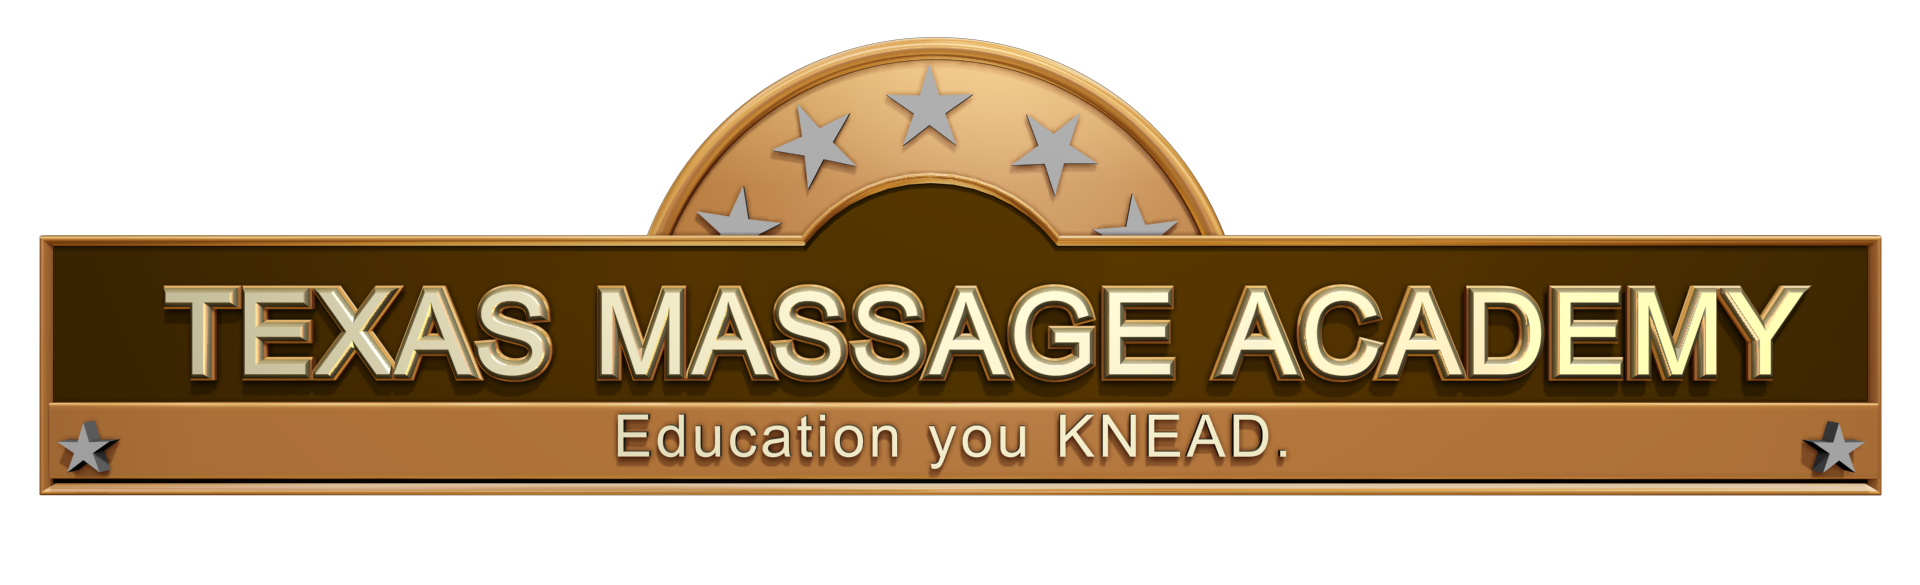 Texas Massage Academy Blog